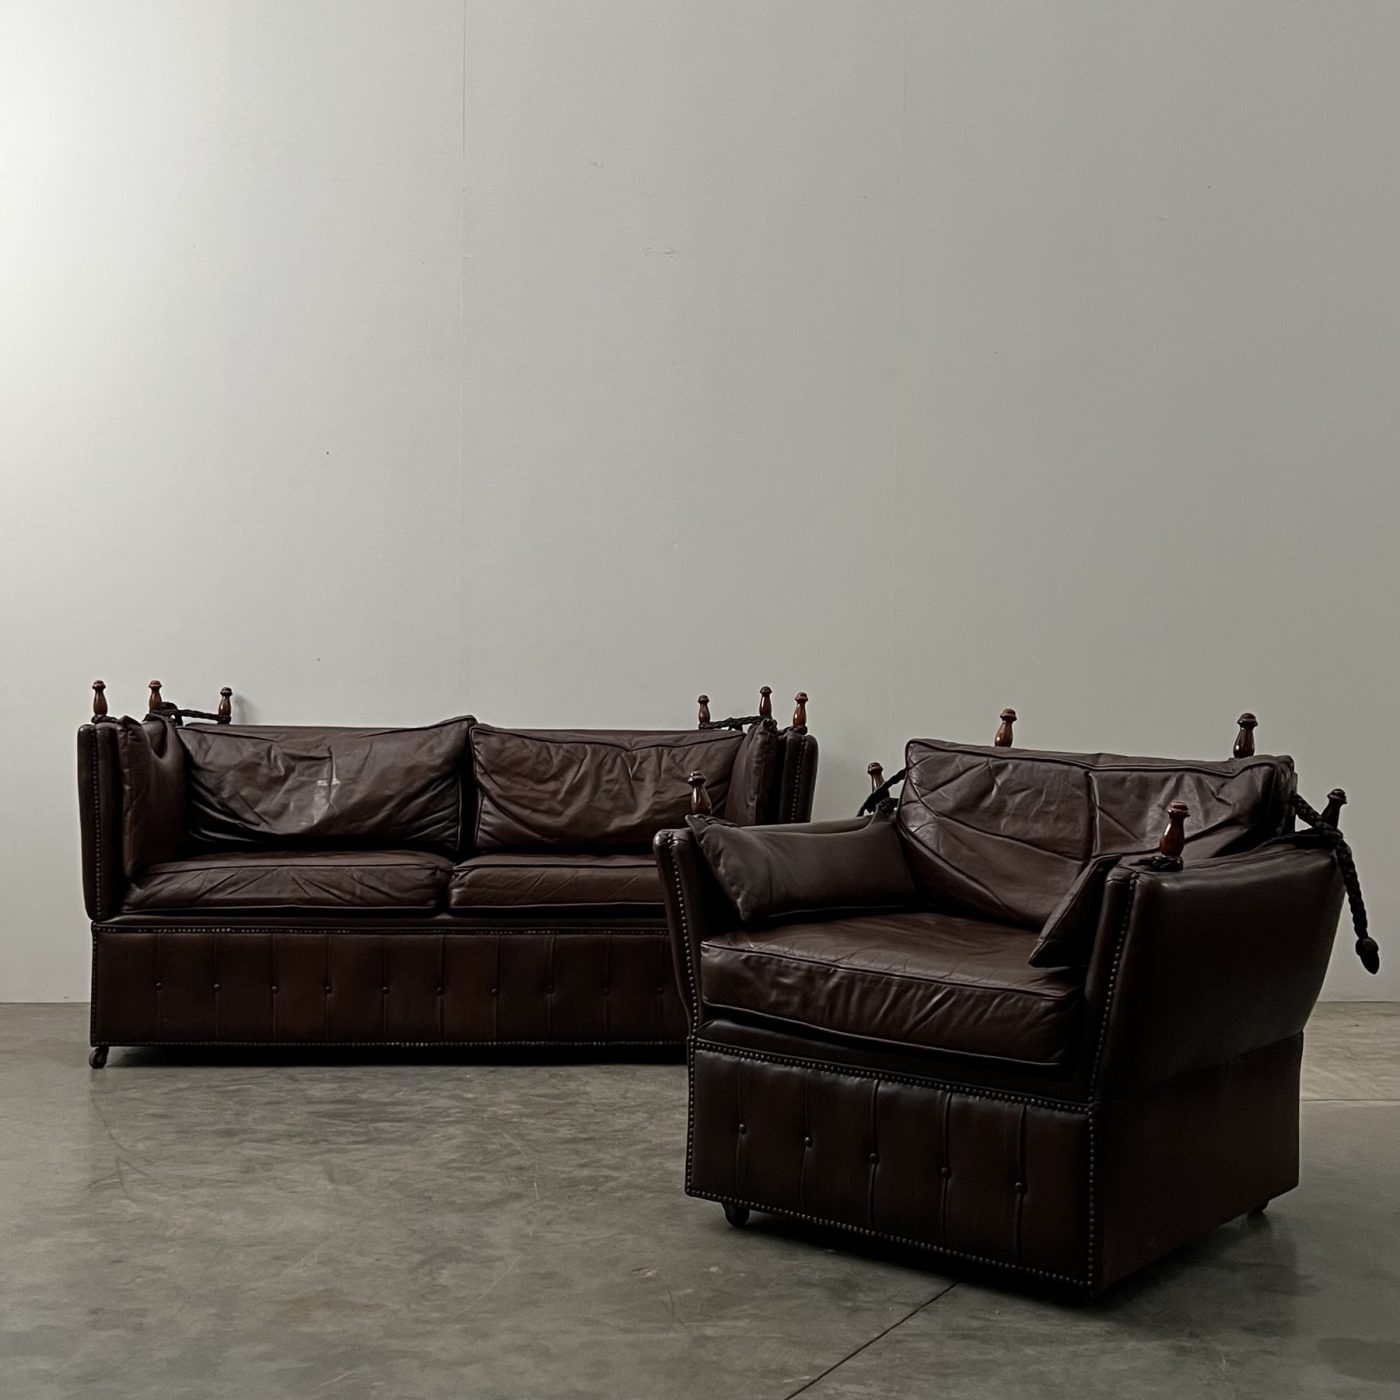 objet-vagabond-leather-set0003